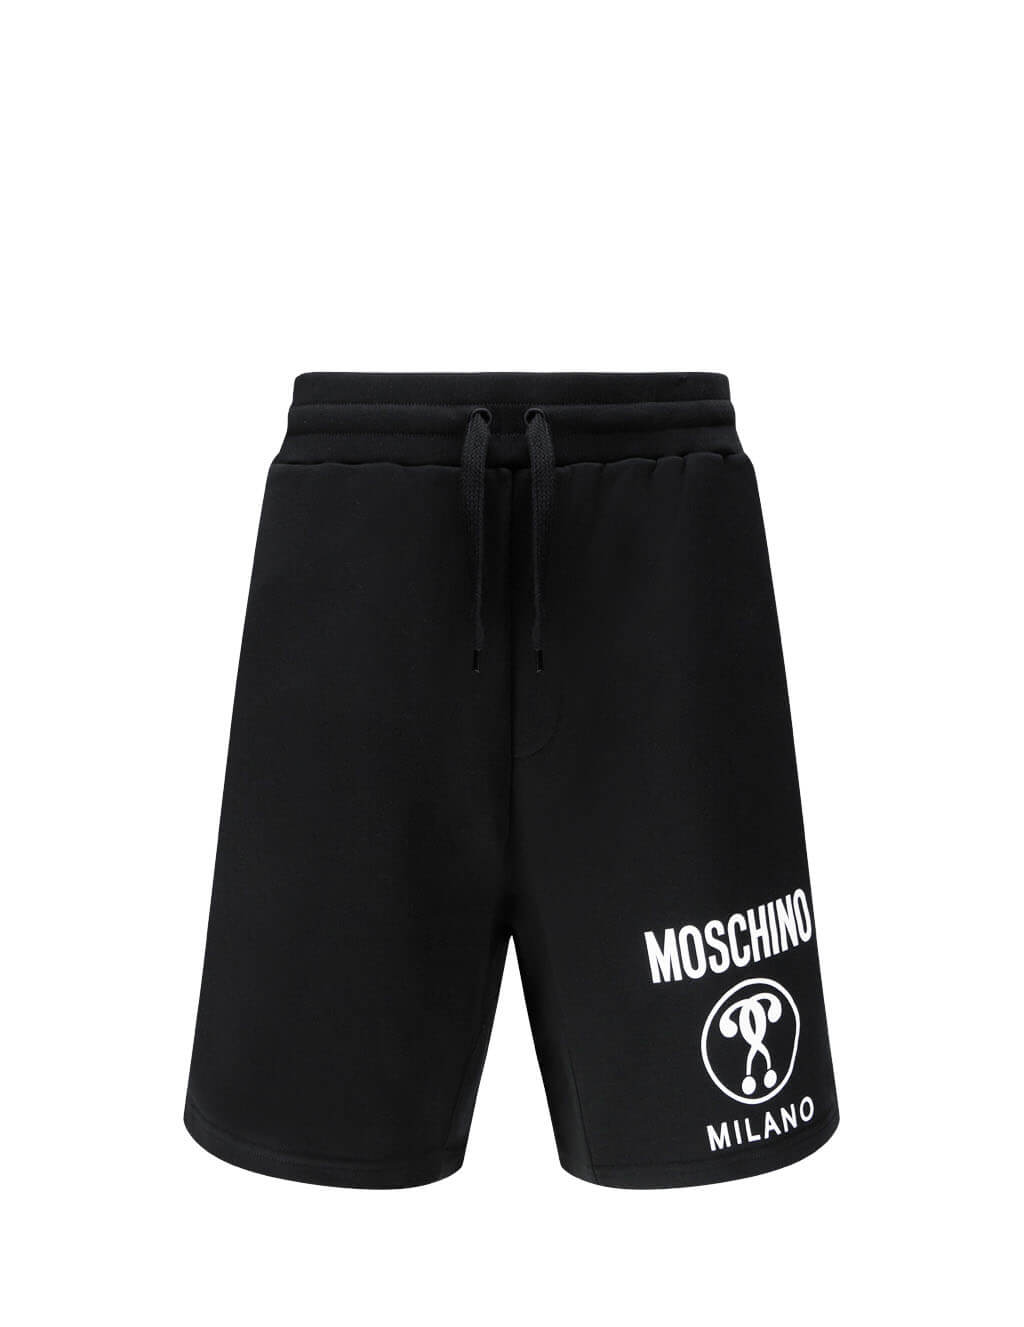 moschino mens shorts